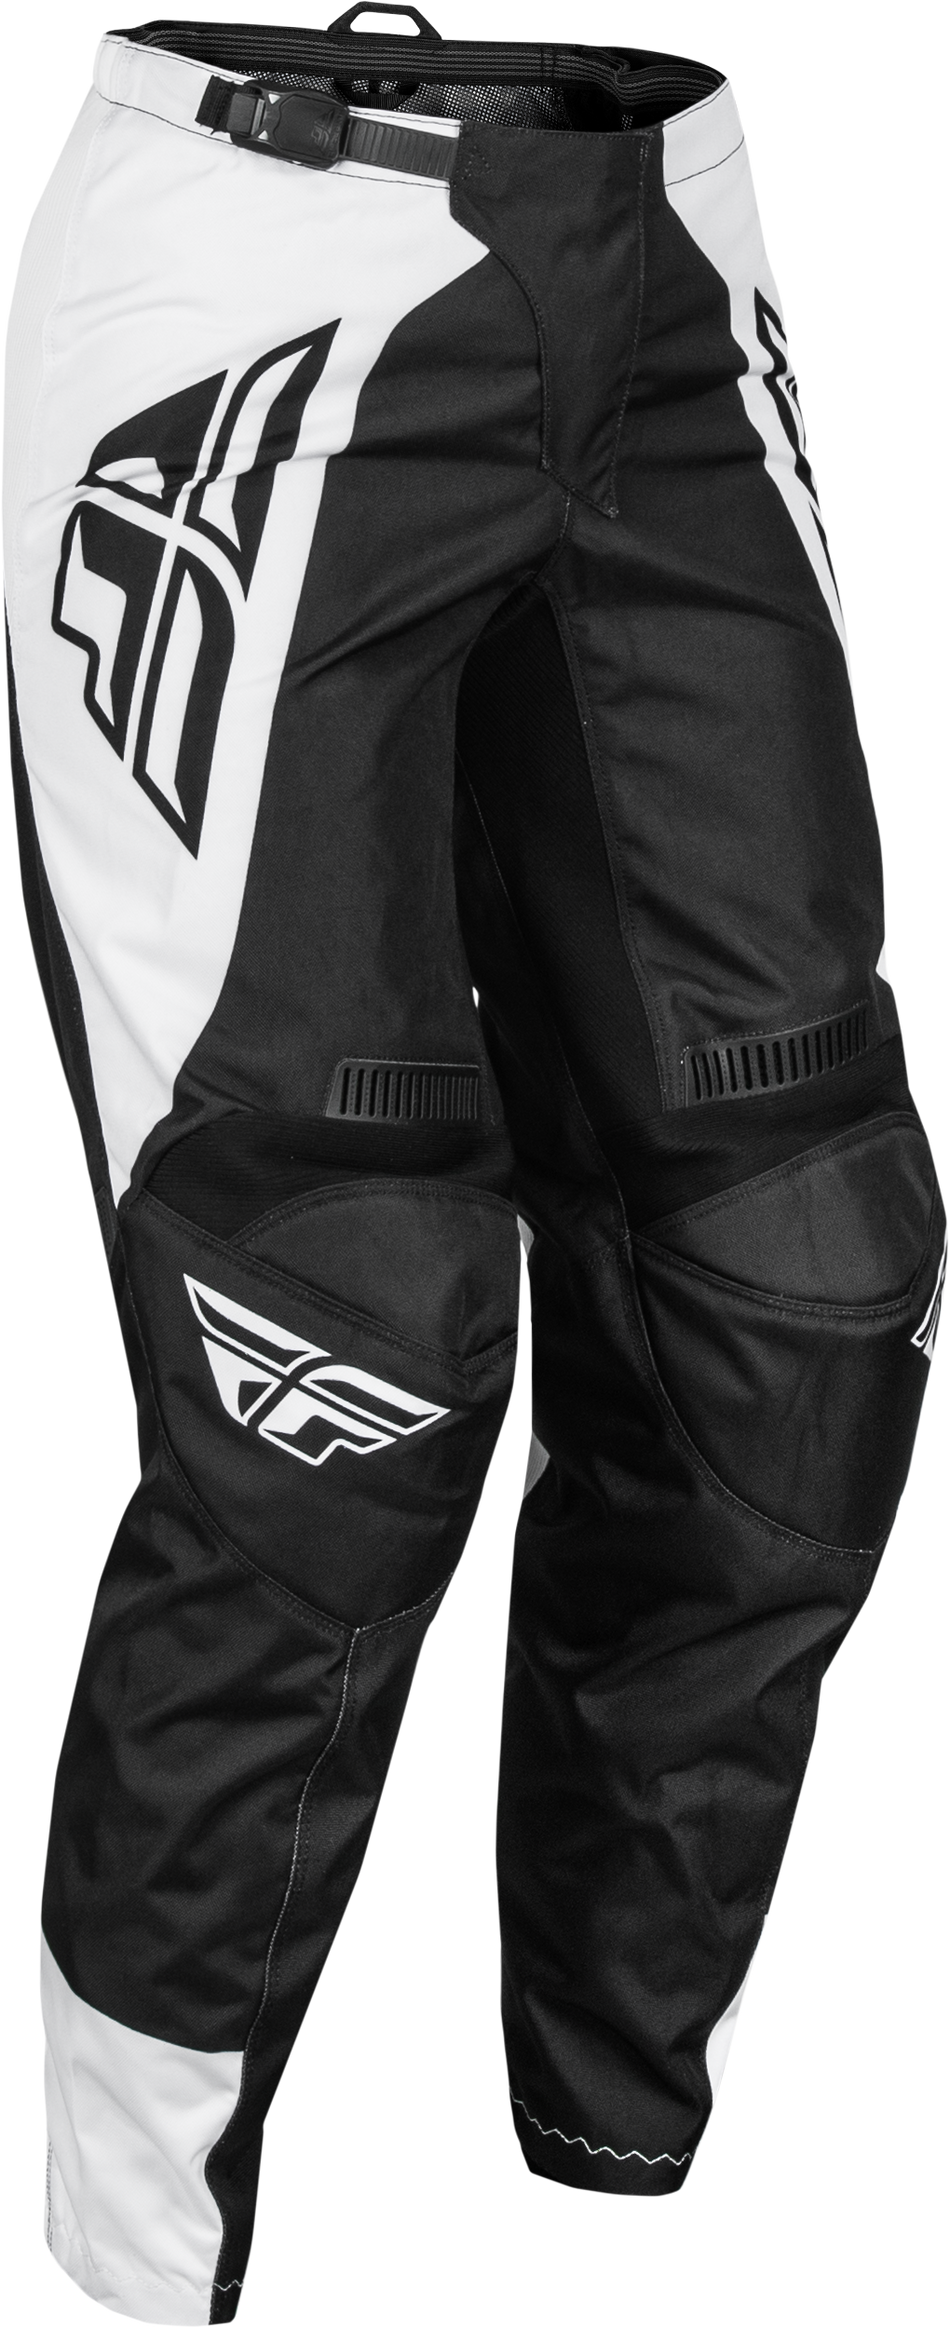 FLY RACING Women's F-16 Pants Black/White Sz 15/16 377-83215